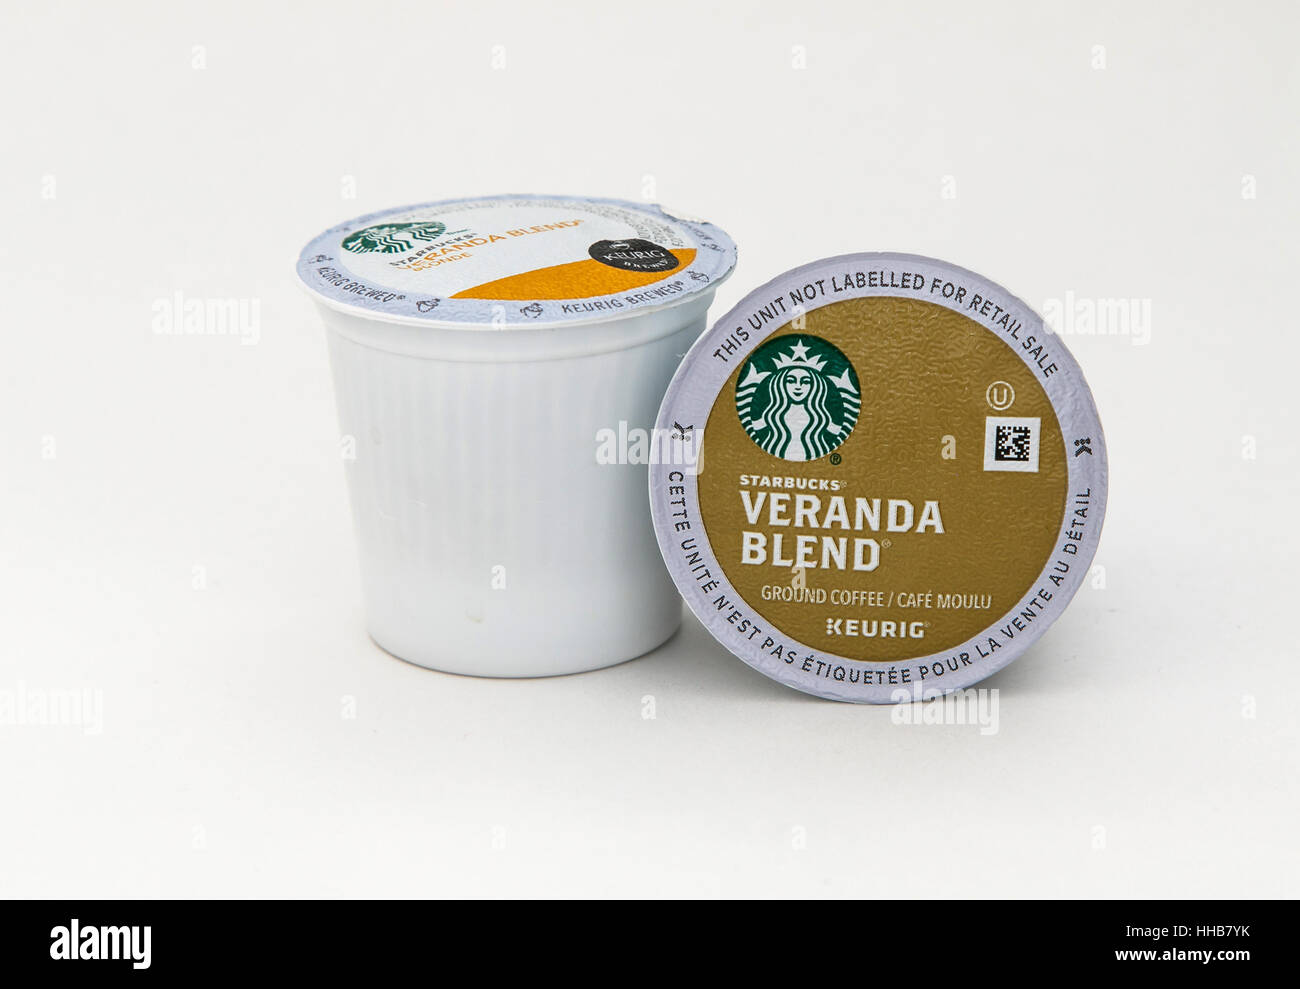 Two Starbucks Veranda Blend coffee capsules for Keurig coffee machine are seen against white background. Stock Photo